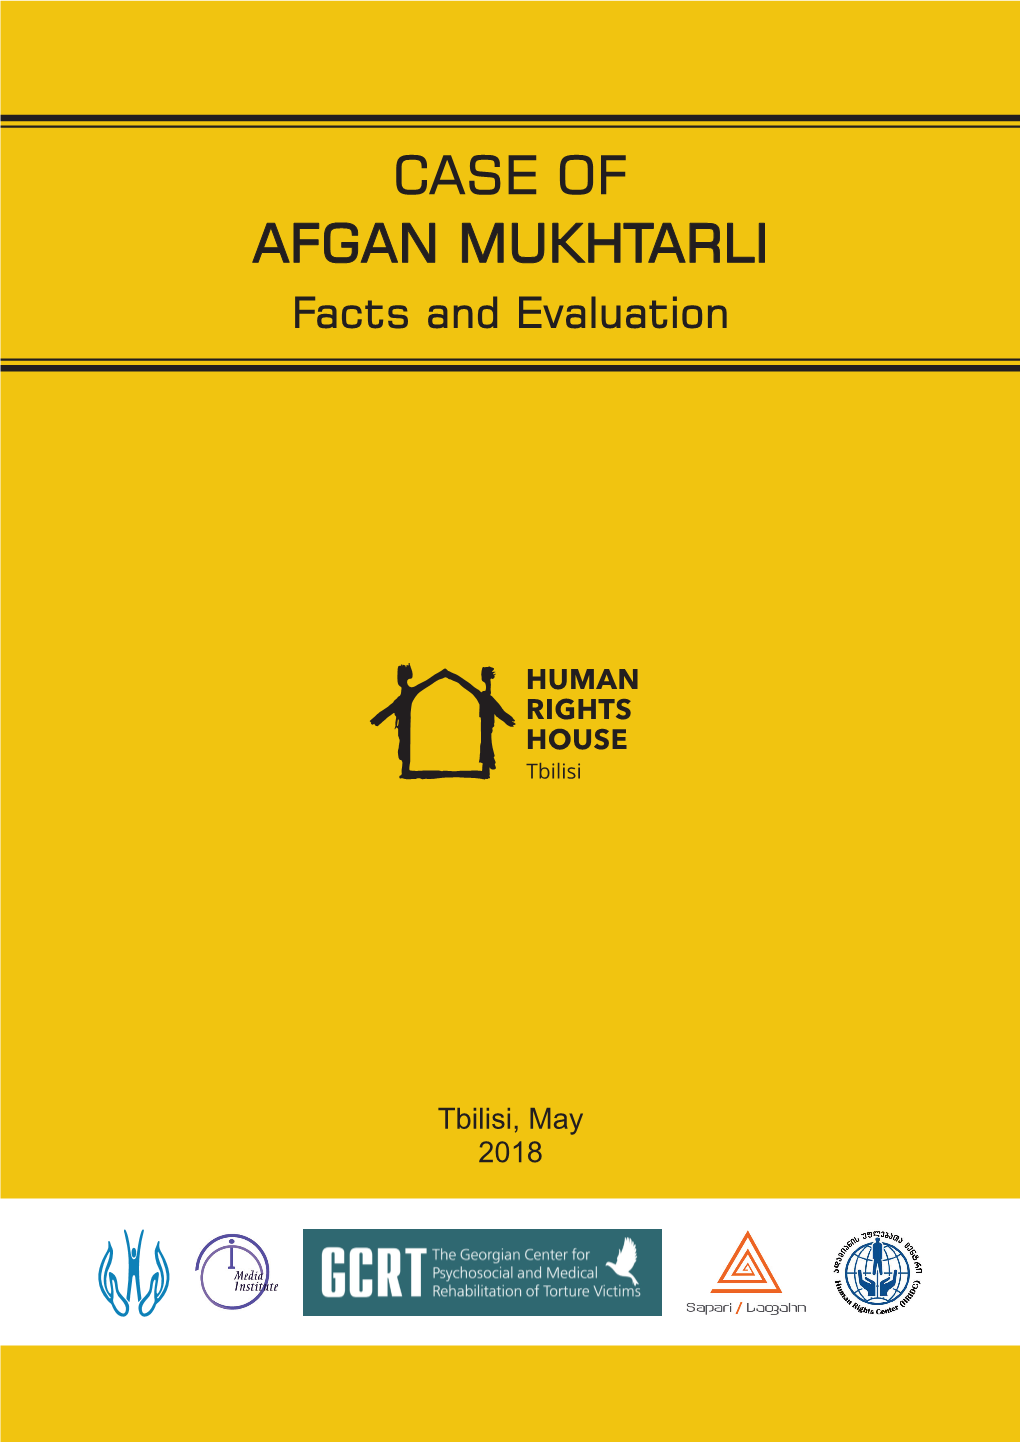 The-Case-Of-Afgan-Mukhtarli.Pdf 2.22MB